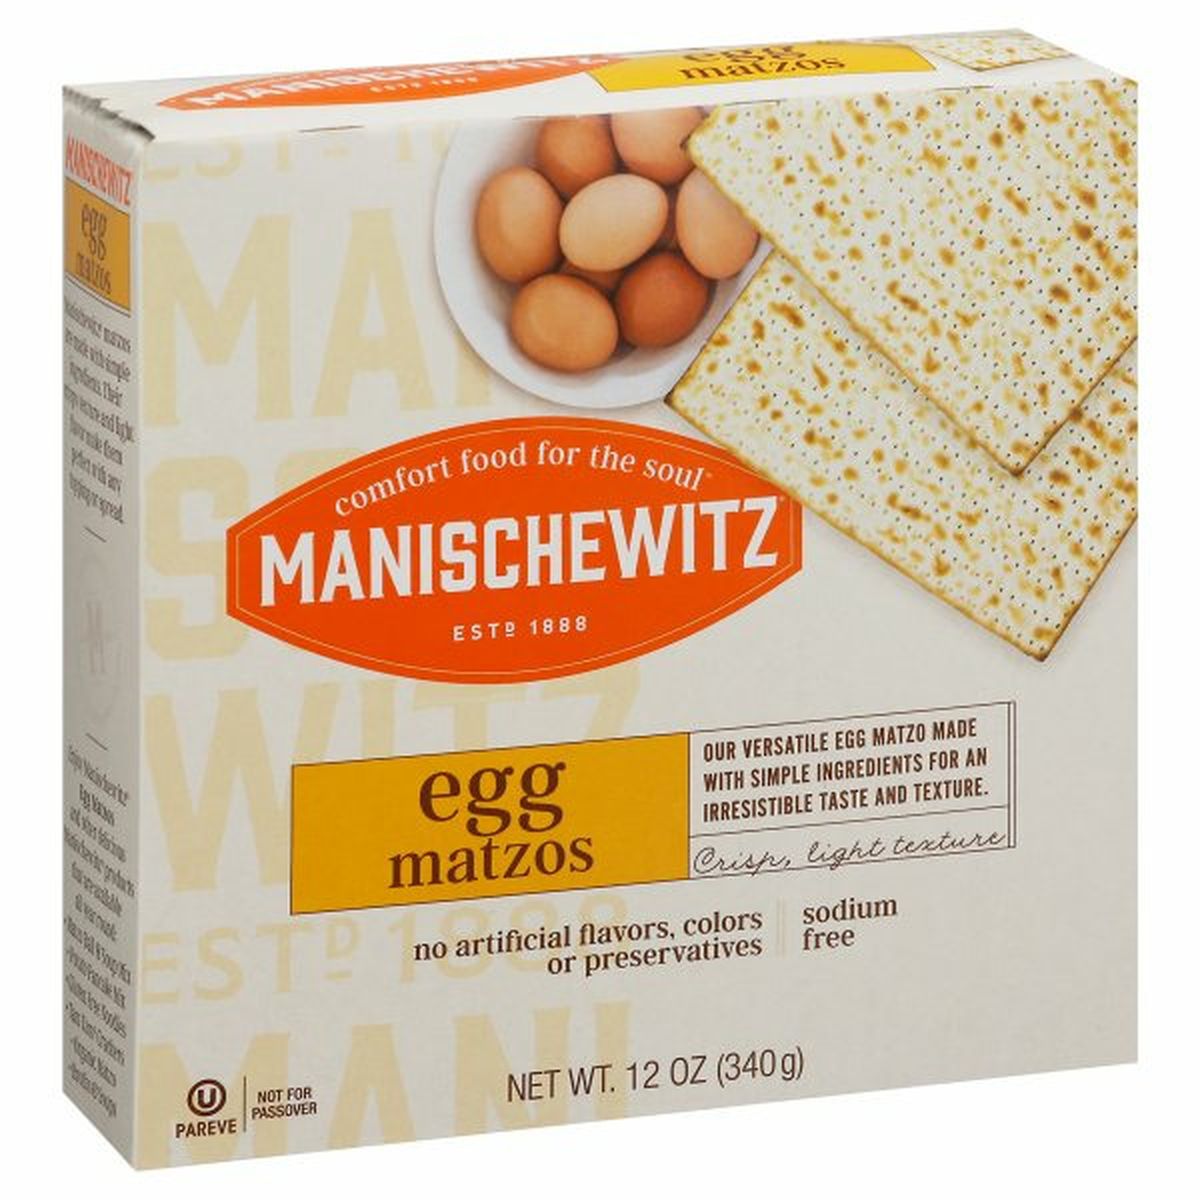 Calories in Manischewitz Matzos, Egg